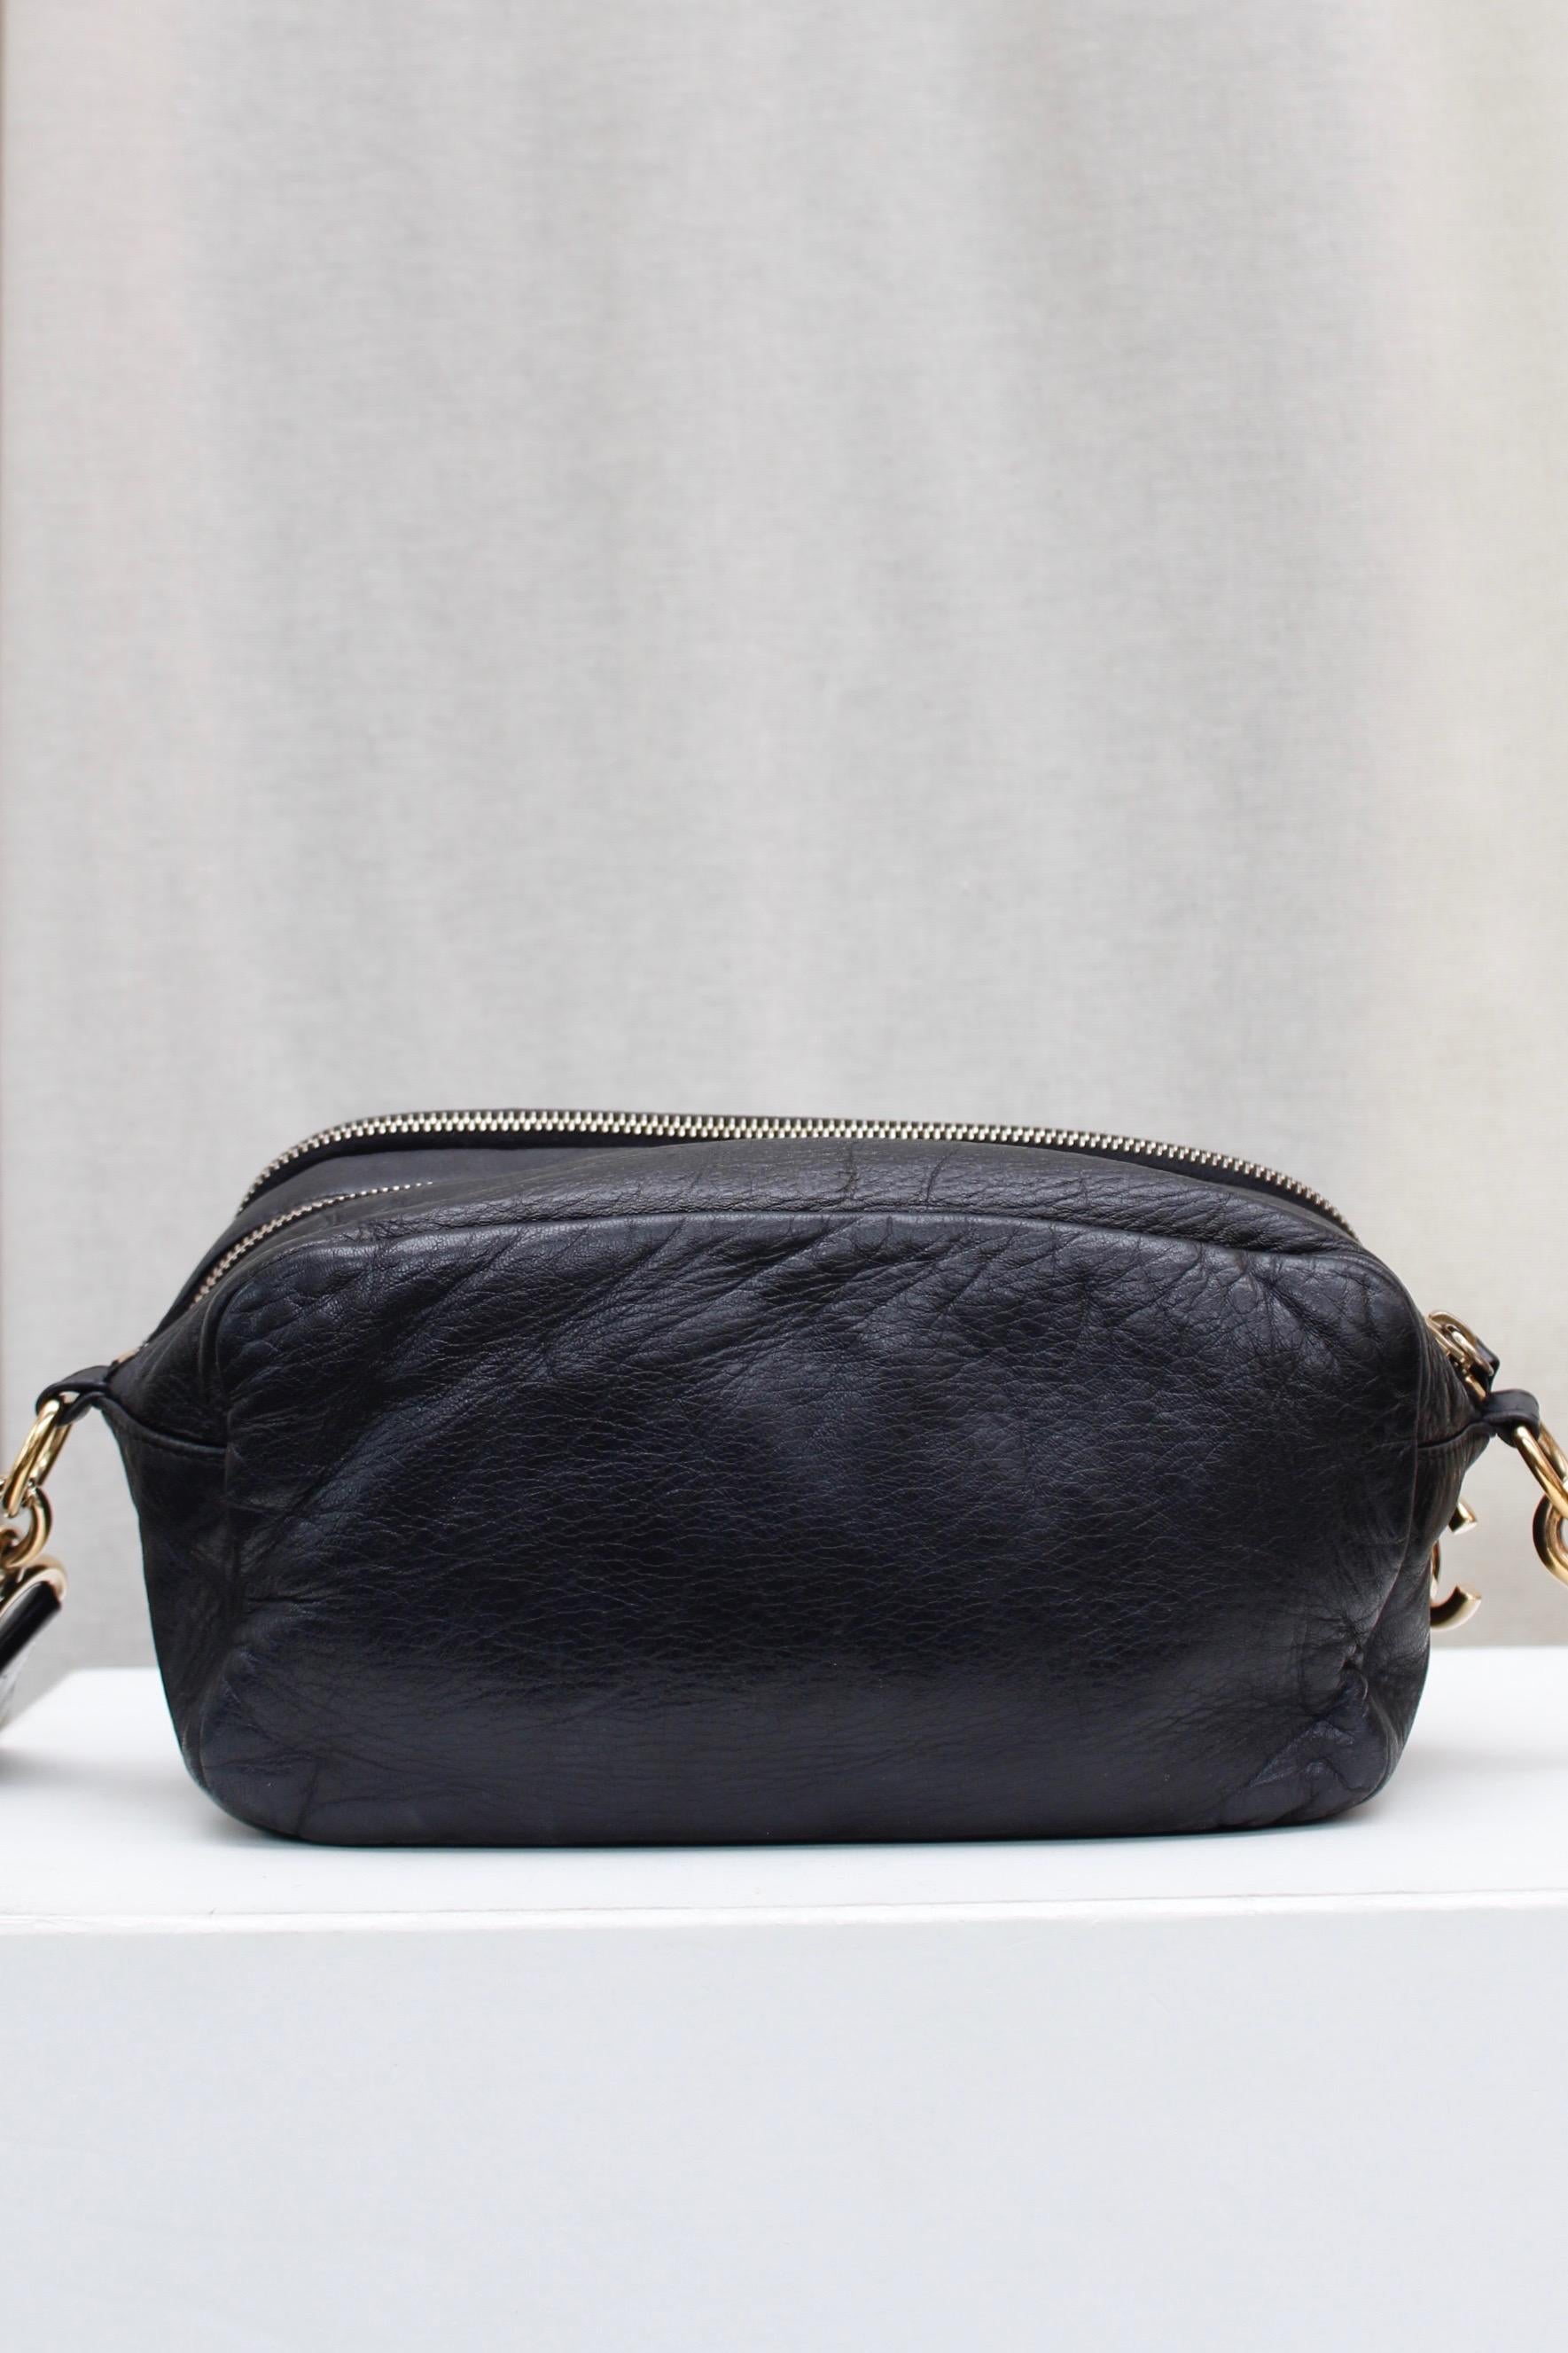 Chanel black leather cross-body bag, 2000’s 1